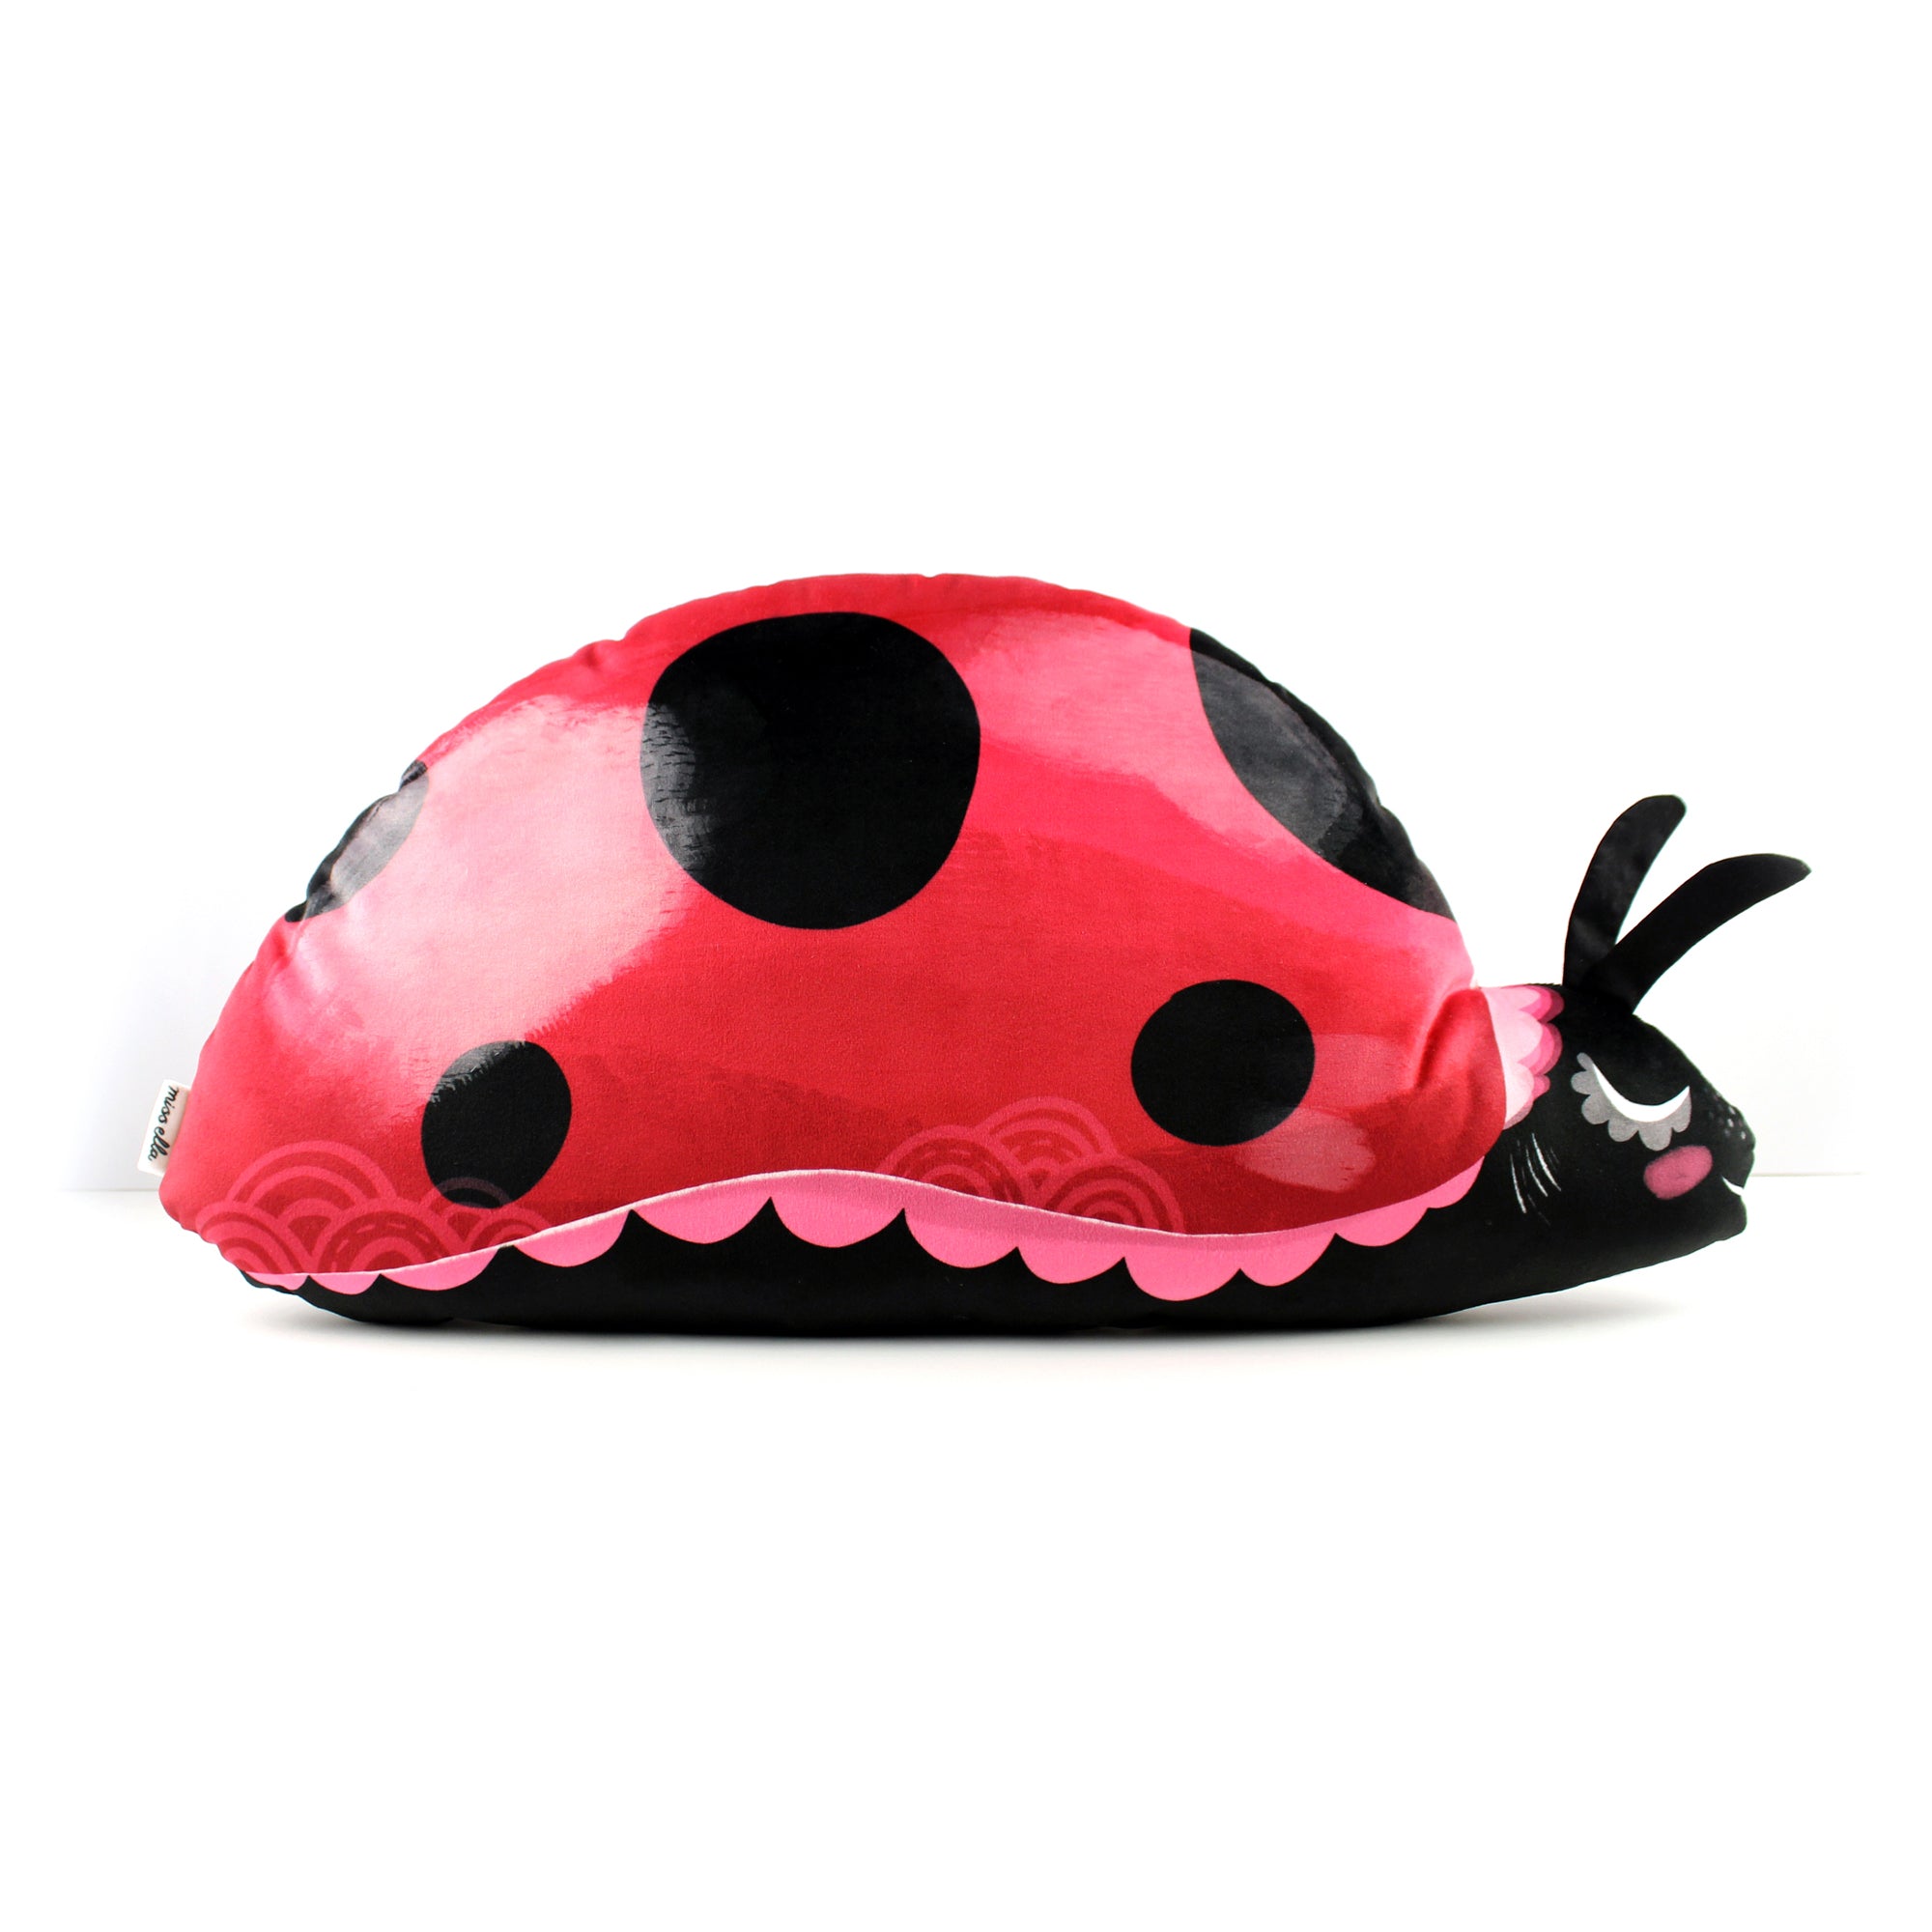 DIY sewing KIT -  Ladybird Cushion